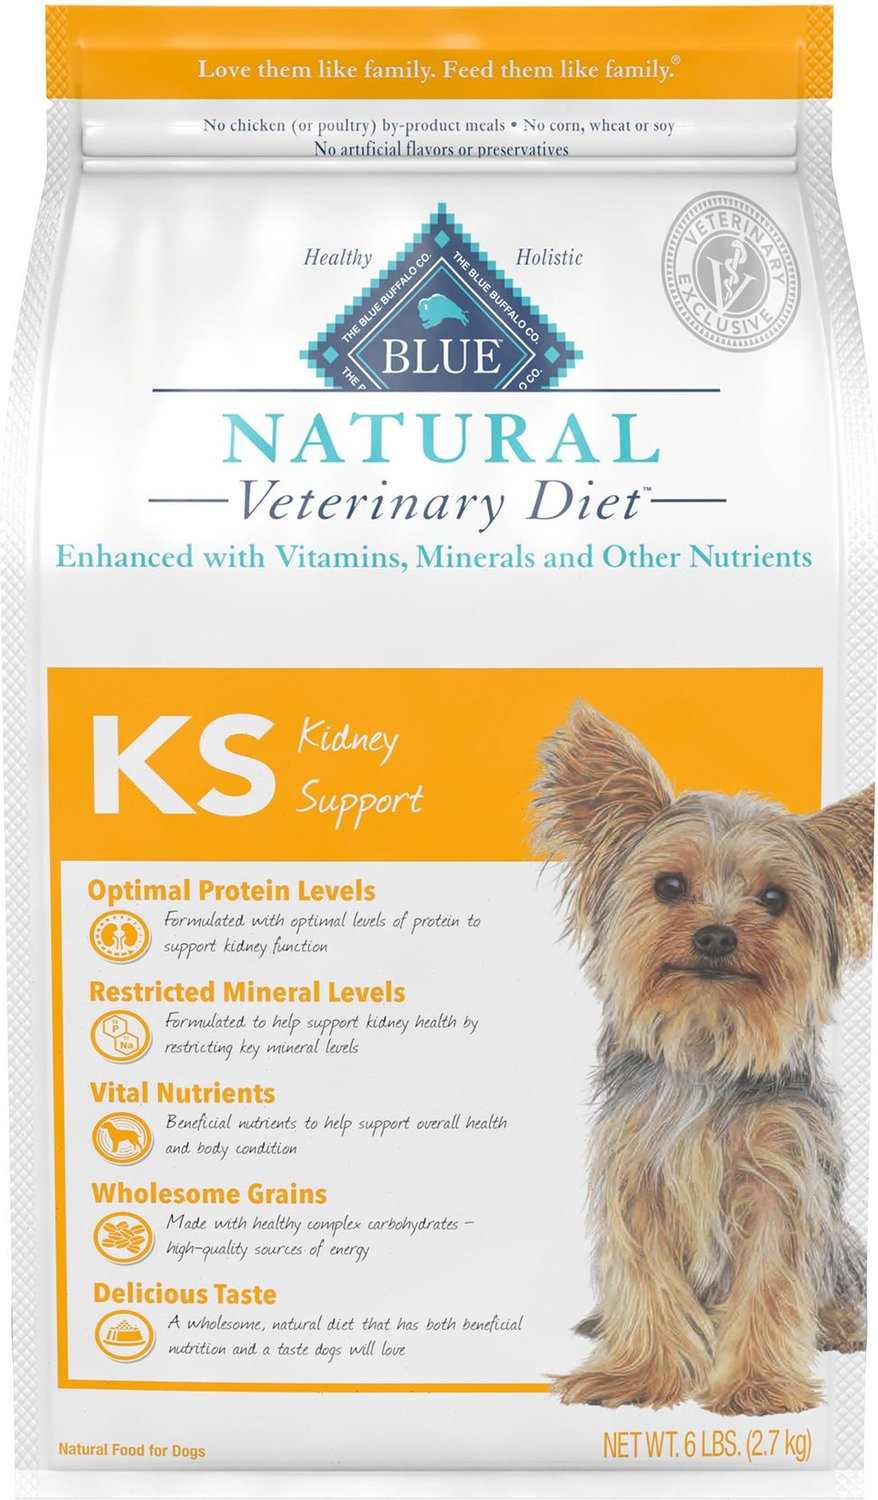 kidney health diet for dogs